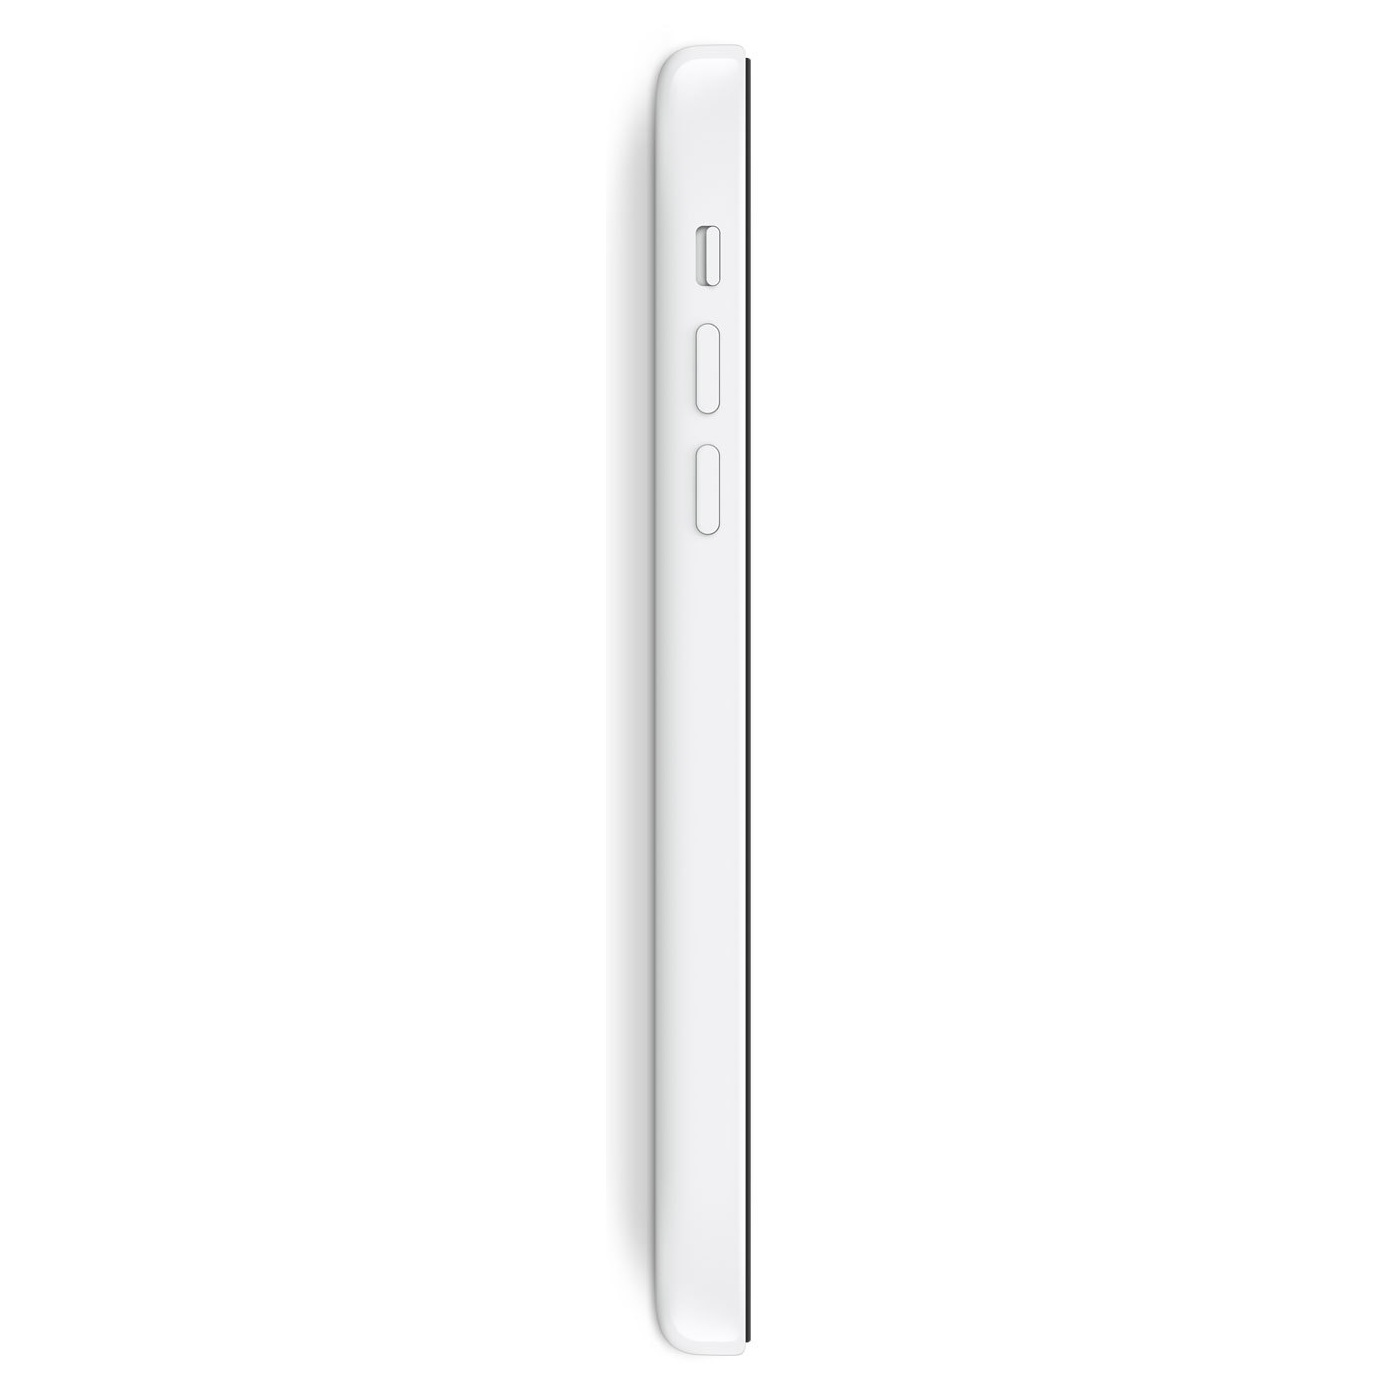 Смартфон Apple iPhone 5C 8Gb White (MG8X2RU/A)